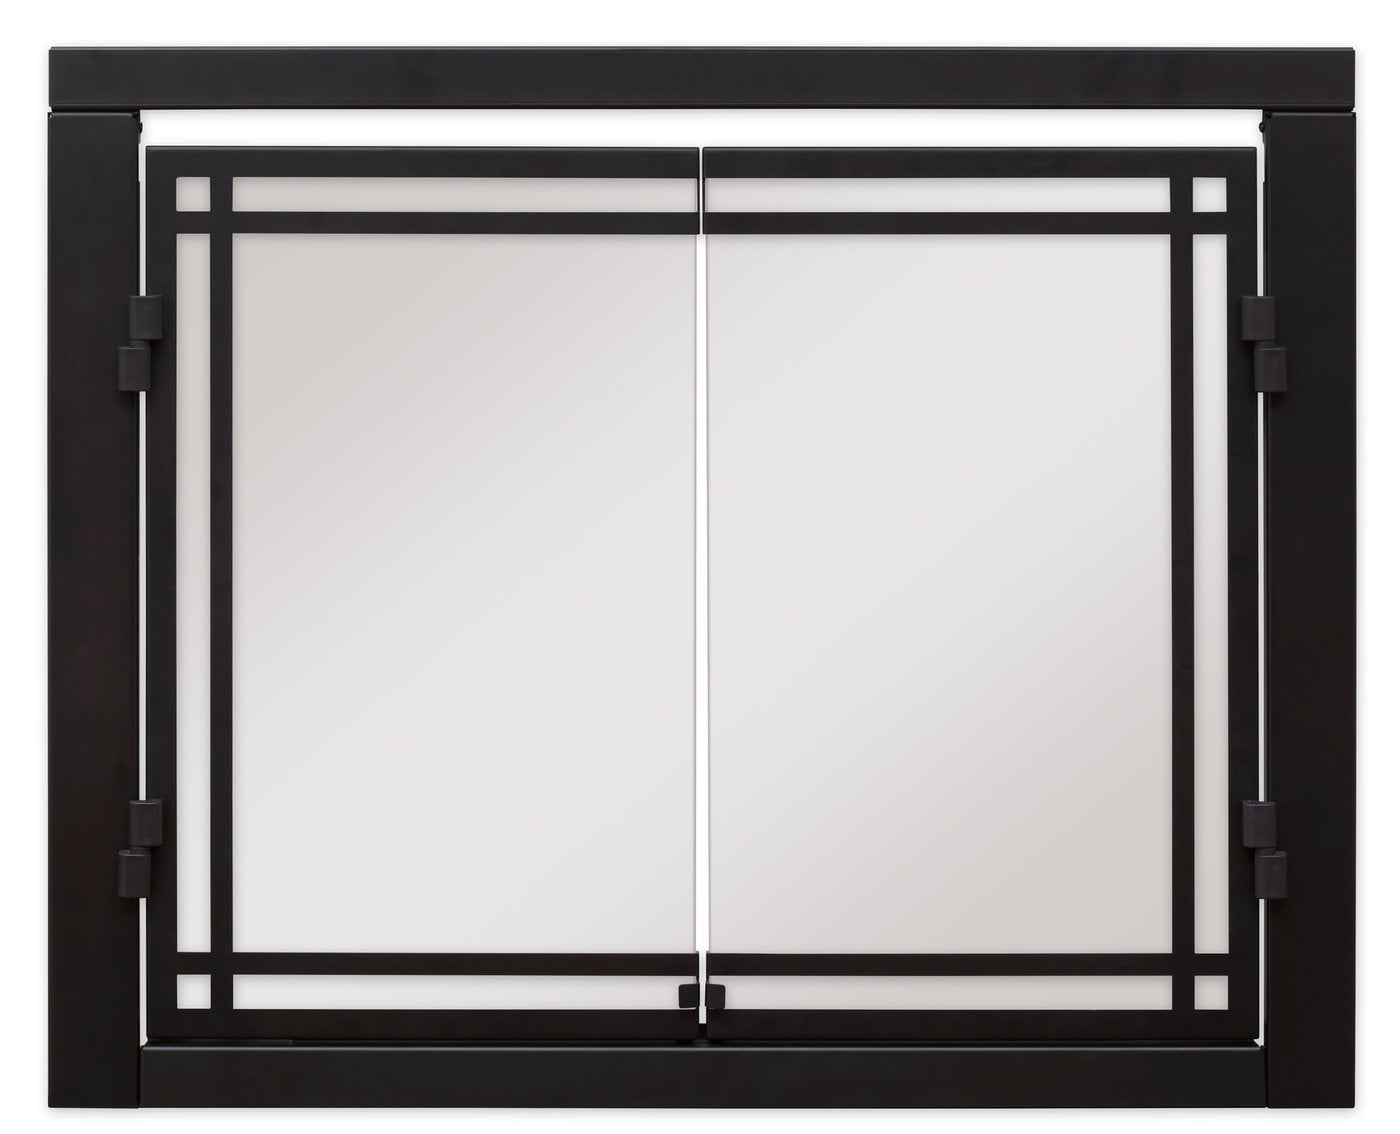 30" Dimplex Revillusion® Double Glass Doors RBFDOOR30